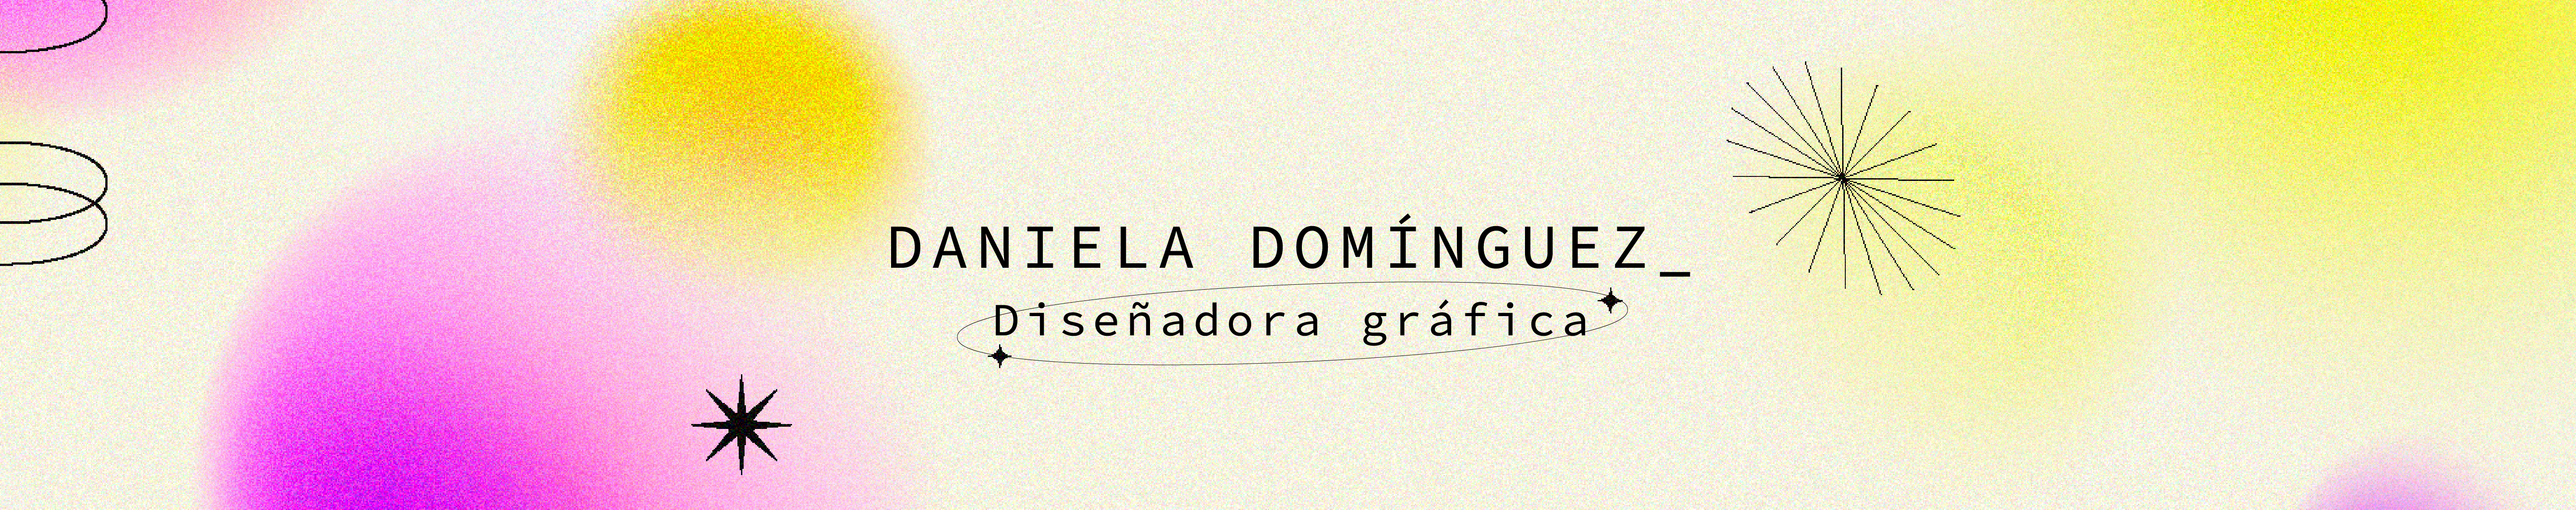 Daniela Dominguez's profile banner